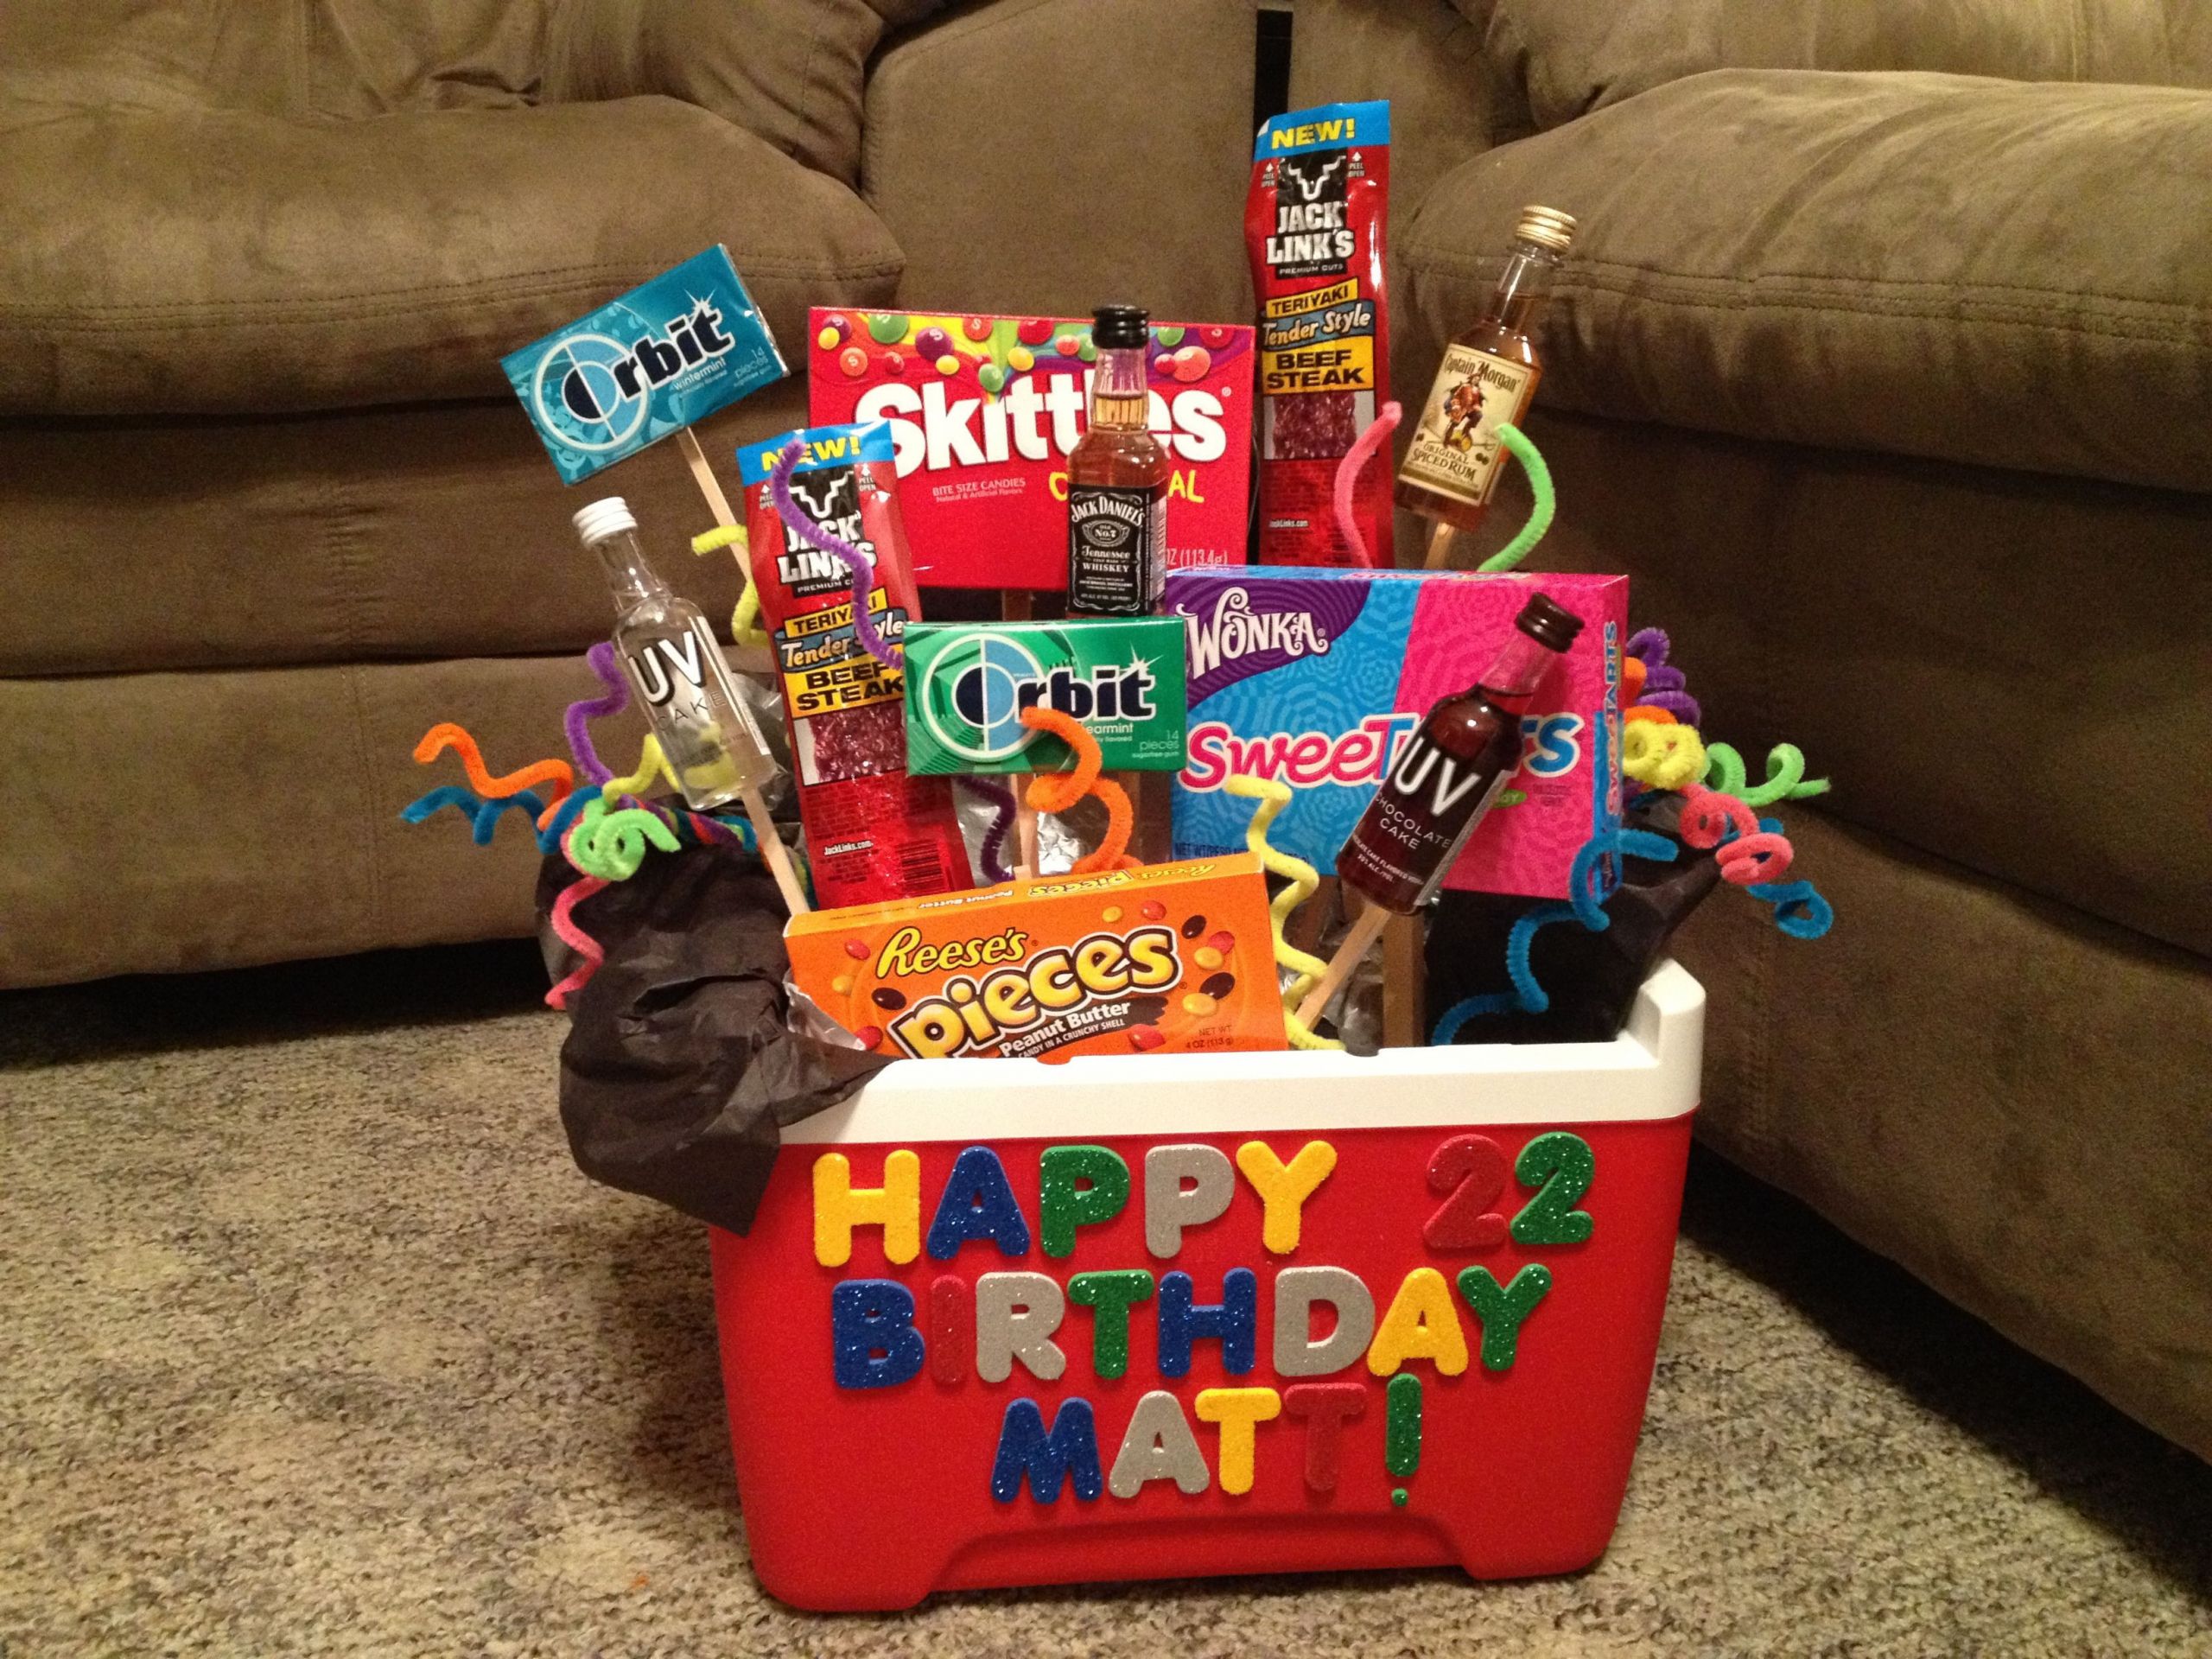 Gift Ideas For Boyfriends Mom Birthday
 The Best Ideas for Gift Ideas for Boyfriends Mom Birthday